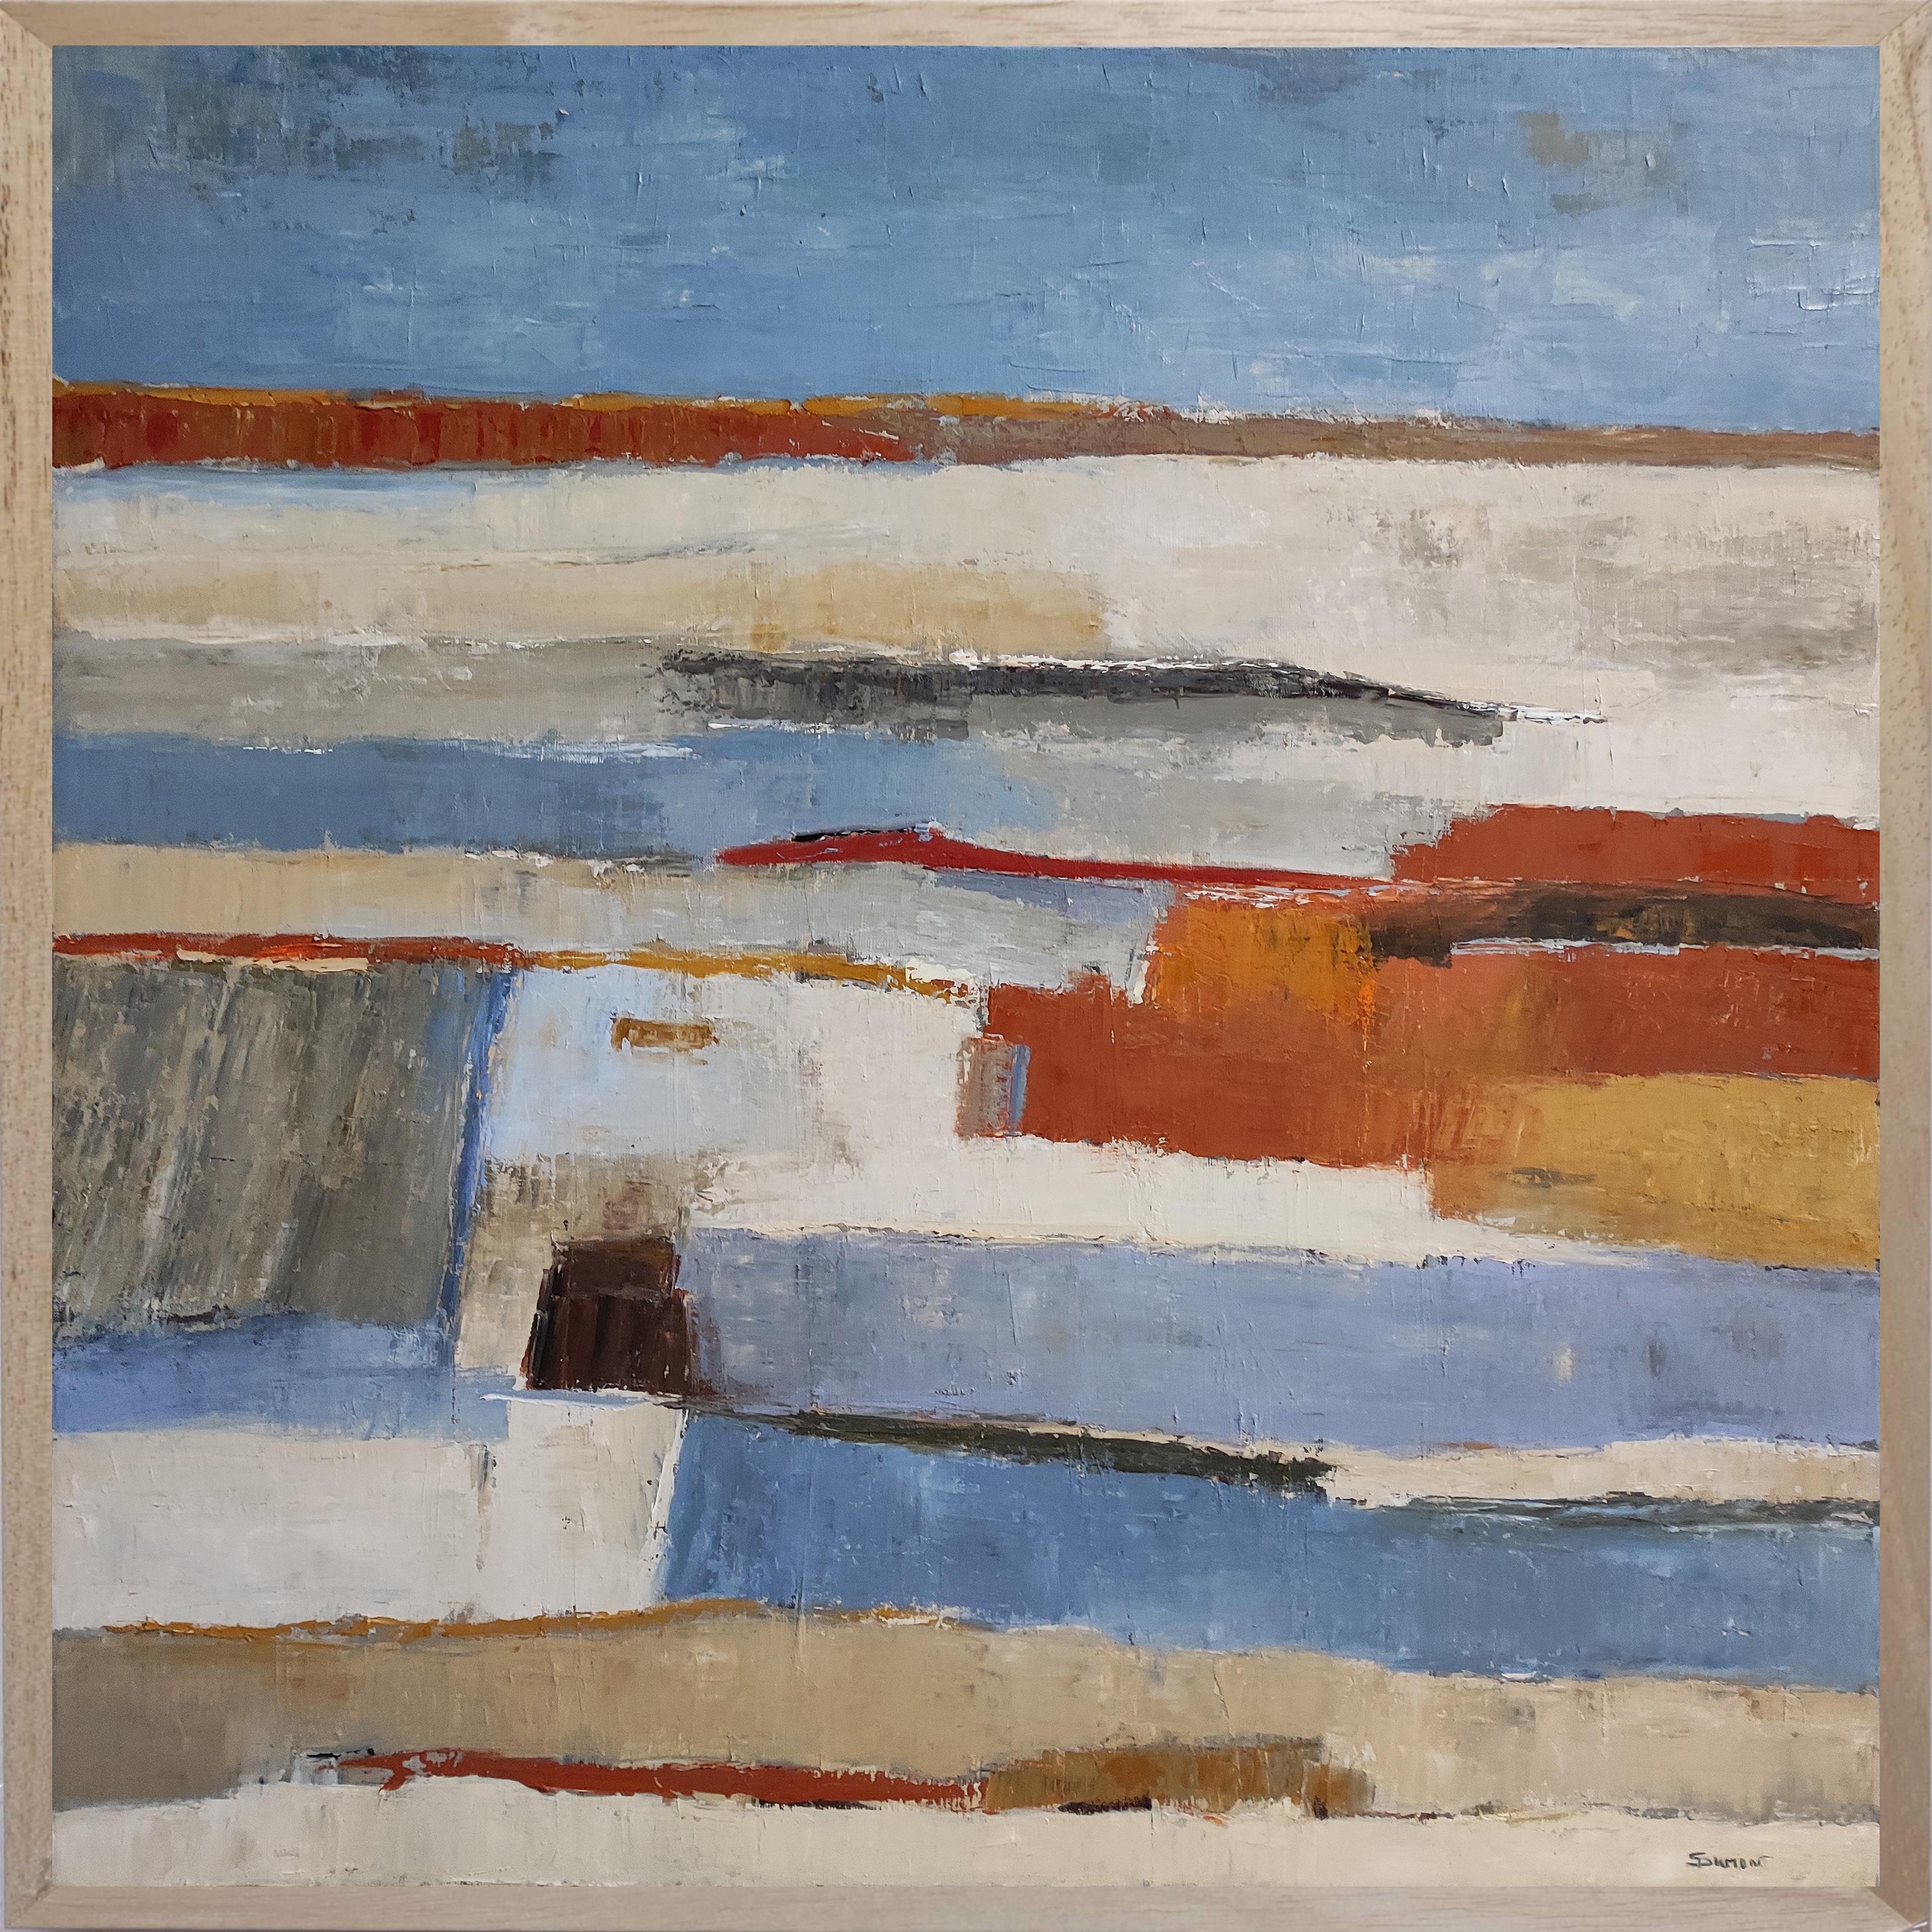 SOPHIE DUMONT Landscape Painting - winter landscape, expressionism abstract, contempory, blue, oil on canvas